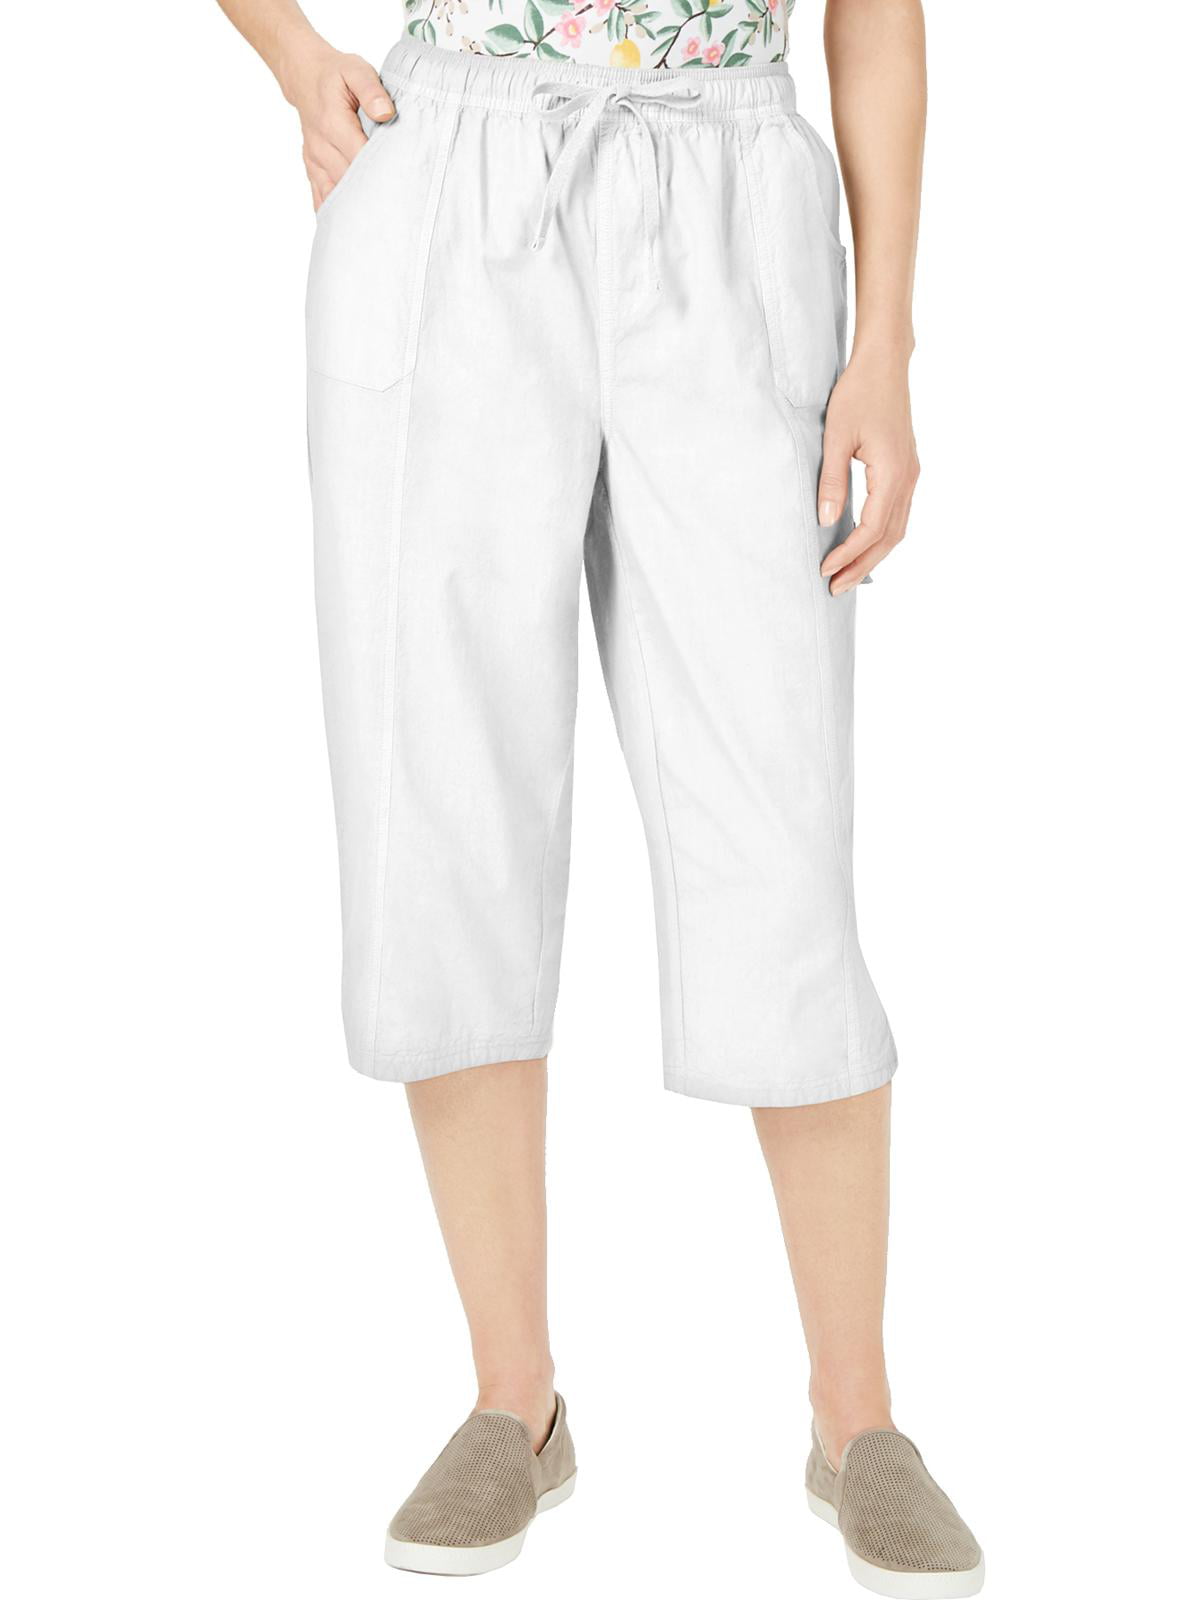 Karen Scott - Karen Scott Womens Cotton Comfort Waist Khaki Pants White XL - Walmart.com ...